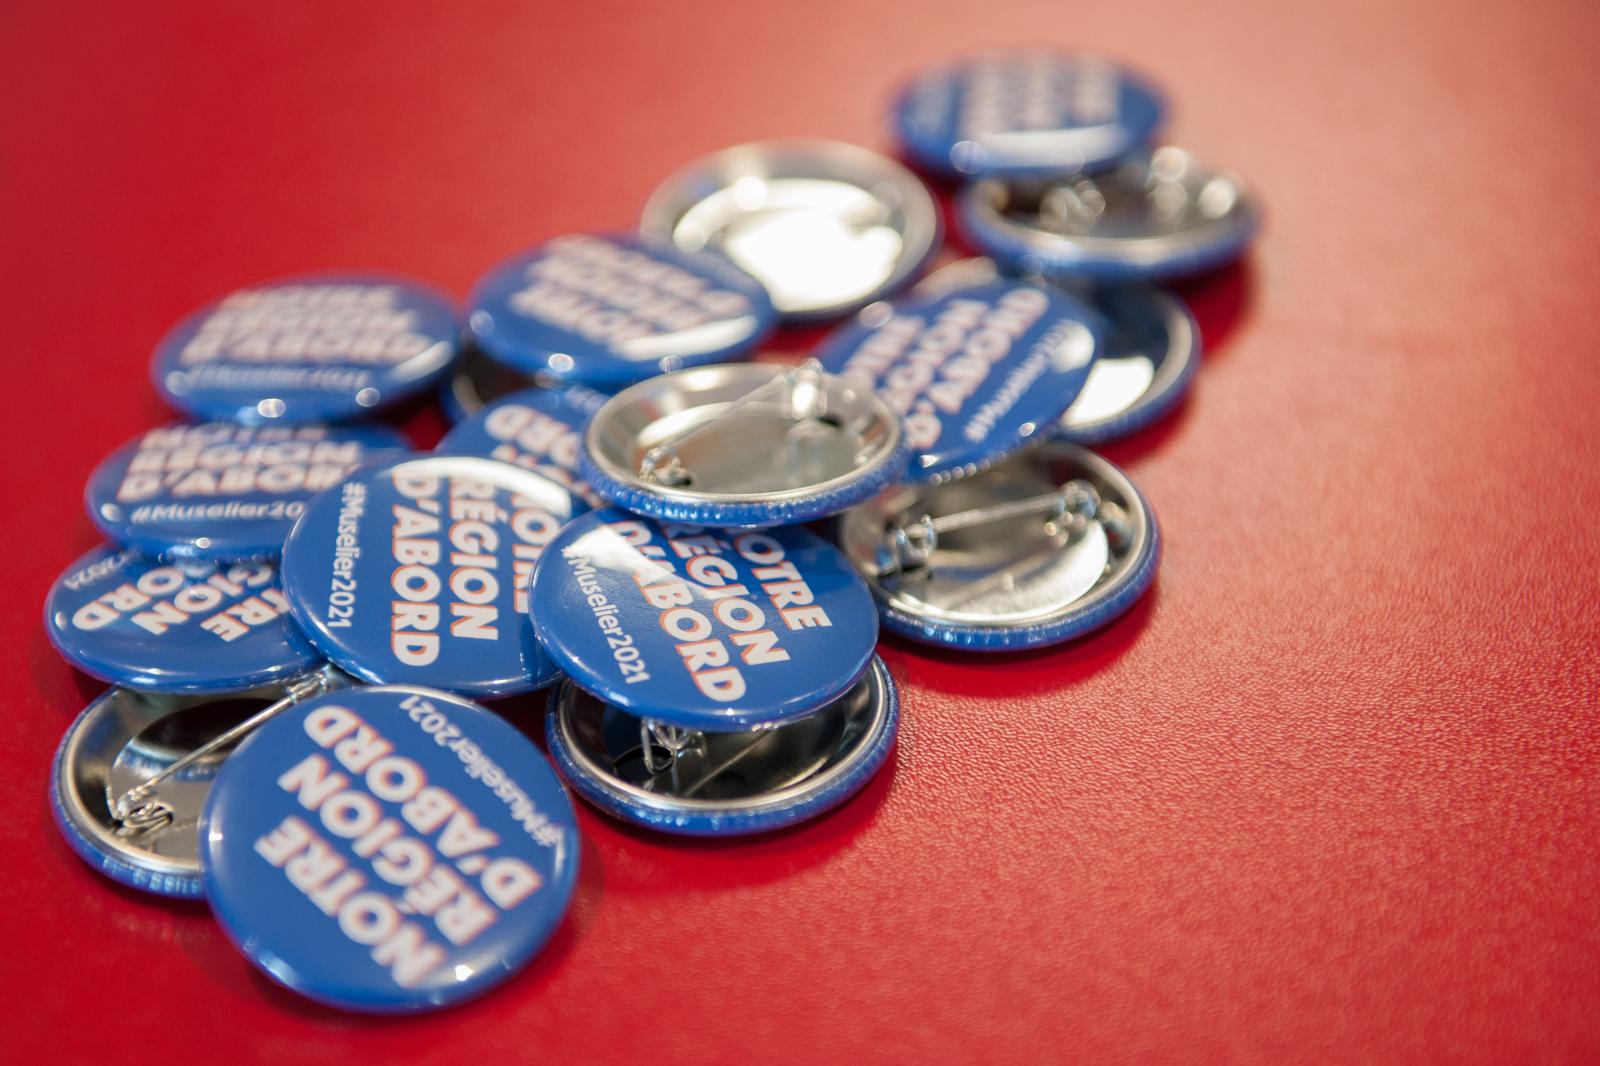 Image from politics - Des badges bleus marqués du slogan 